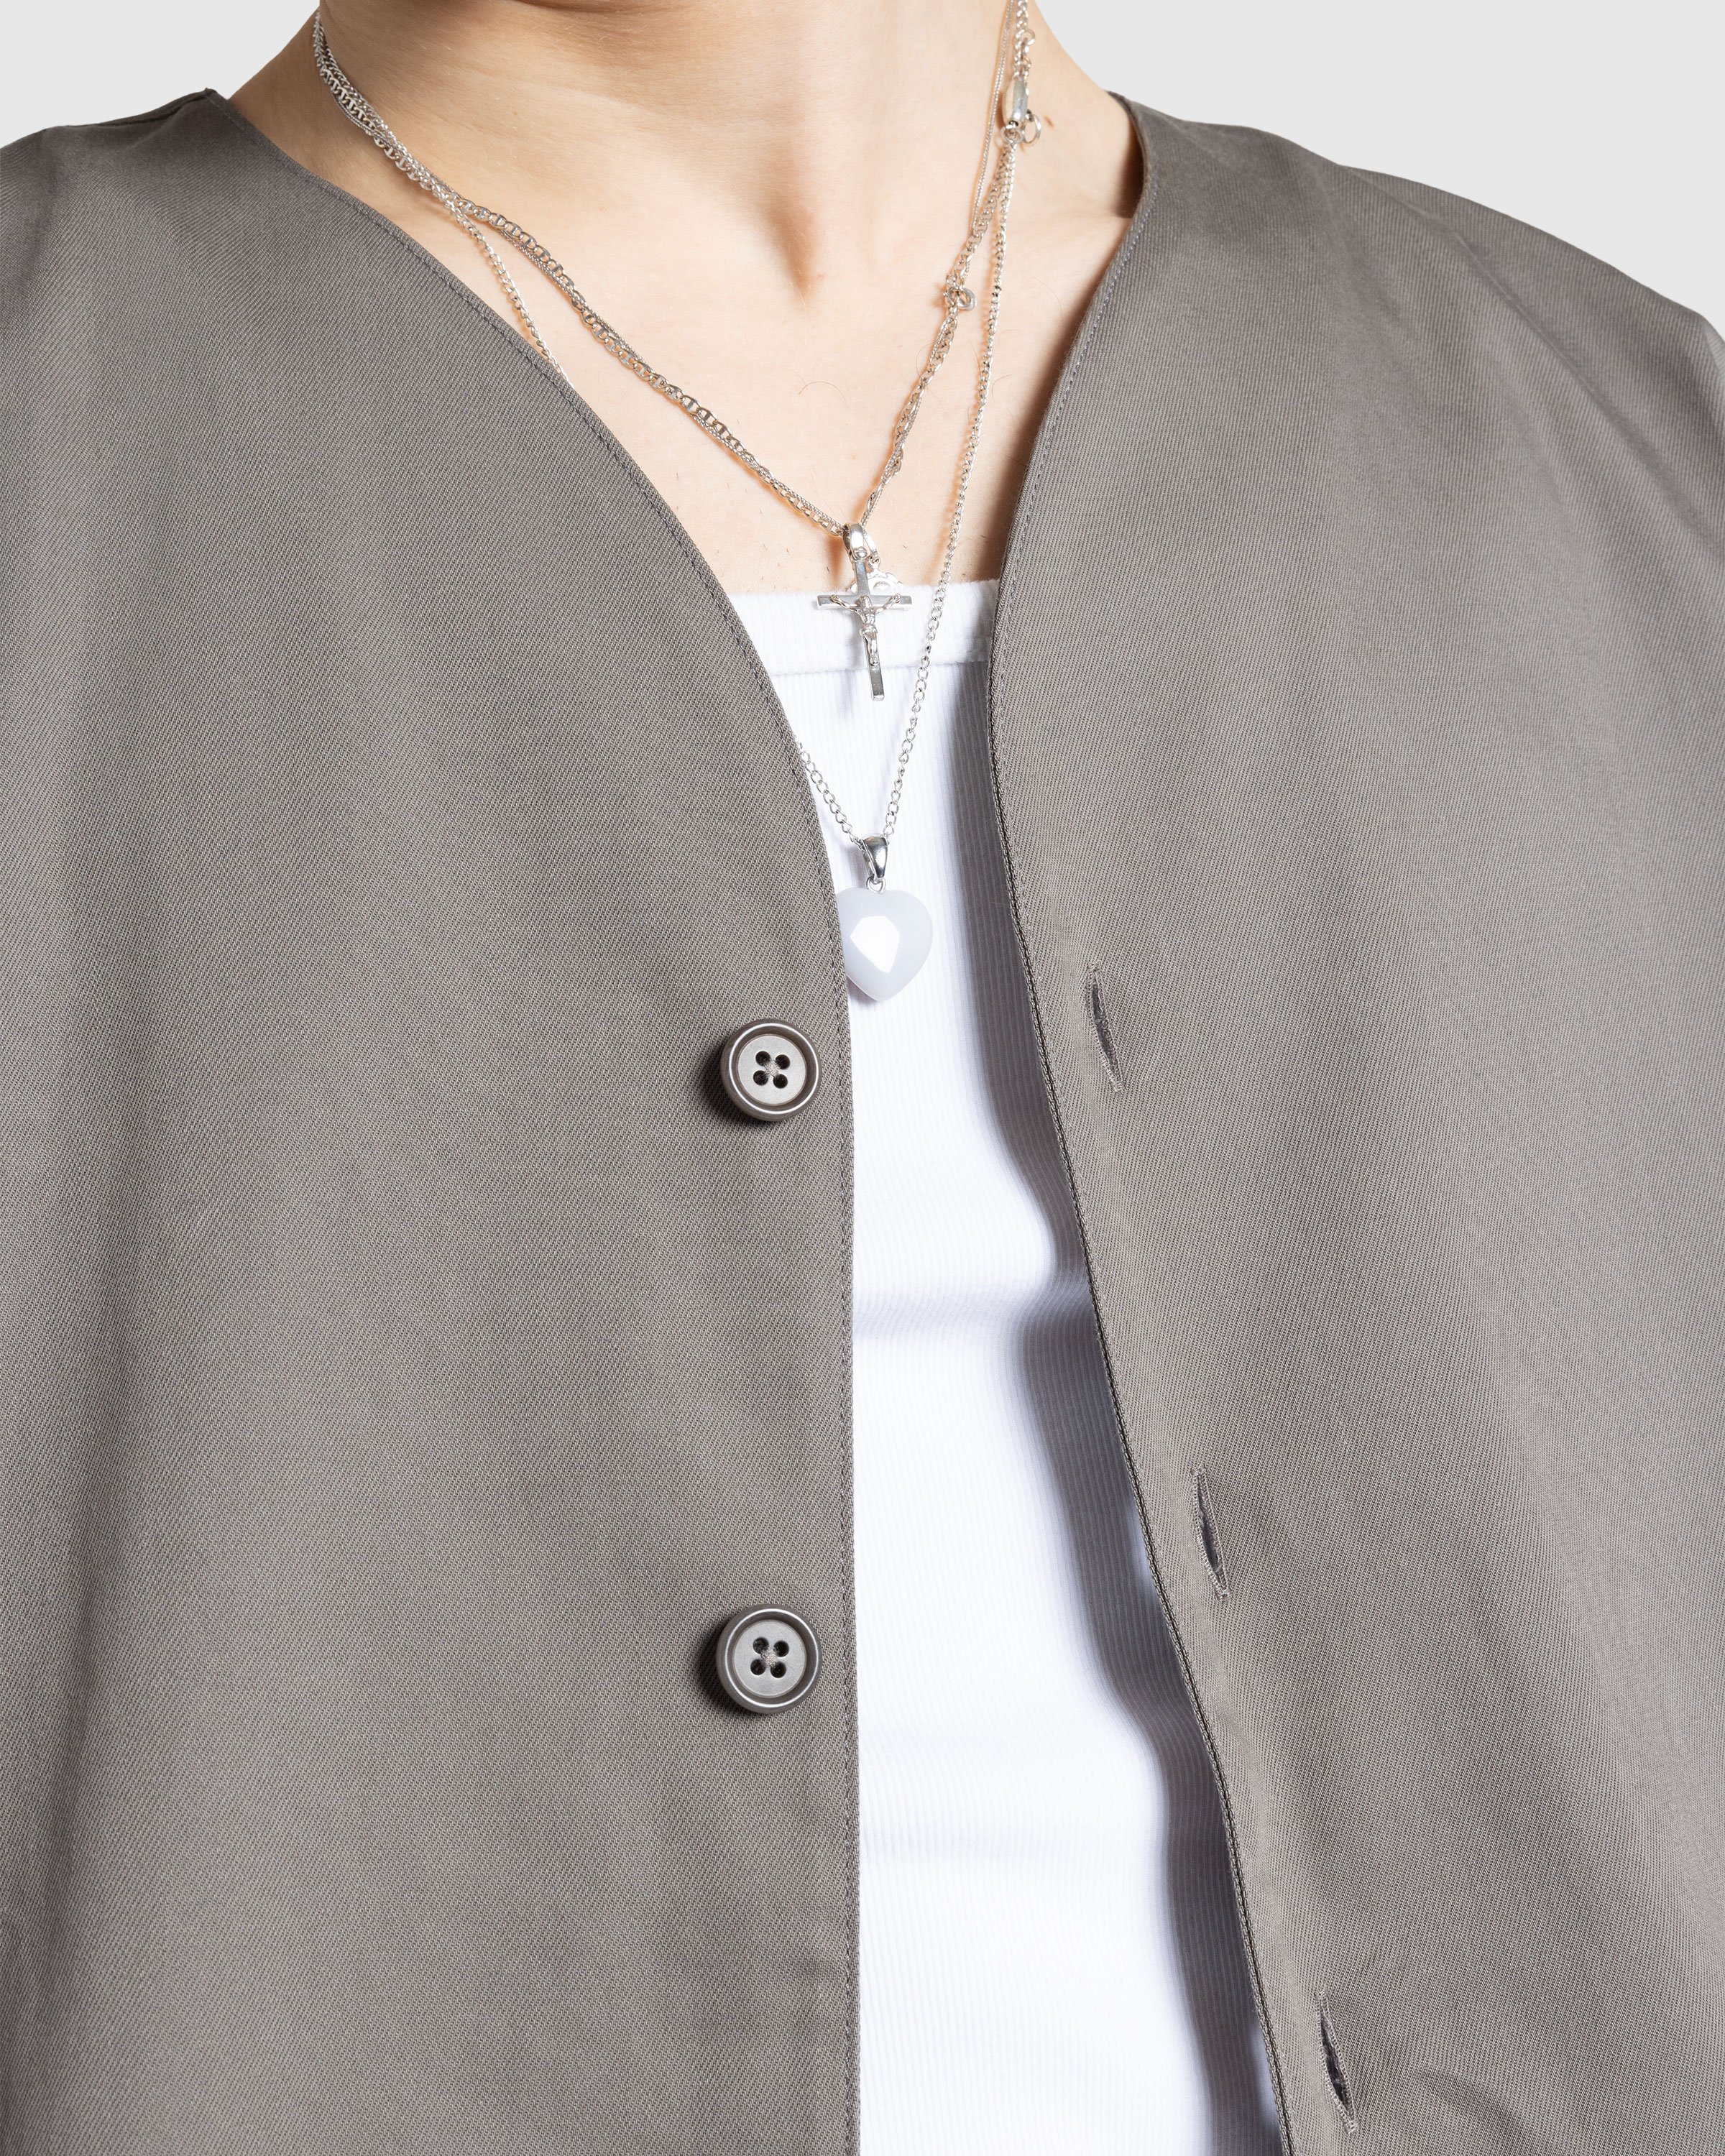 Meta Campania Collective - Mike Short Sleeve Cotton Baseball Shirt Weimaraner Grey - Clothing - Grey - Image 5